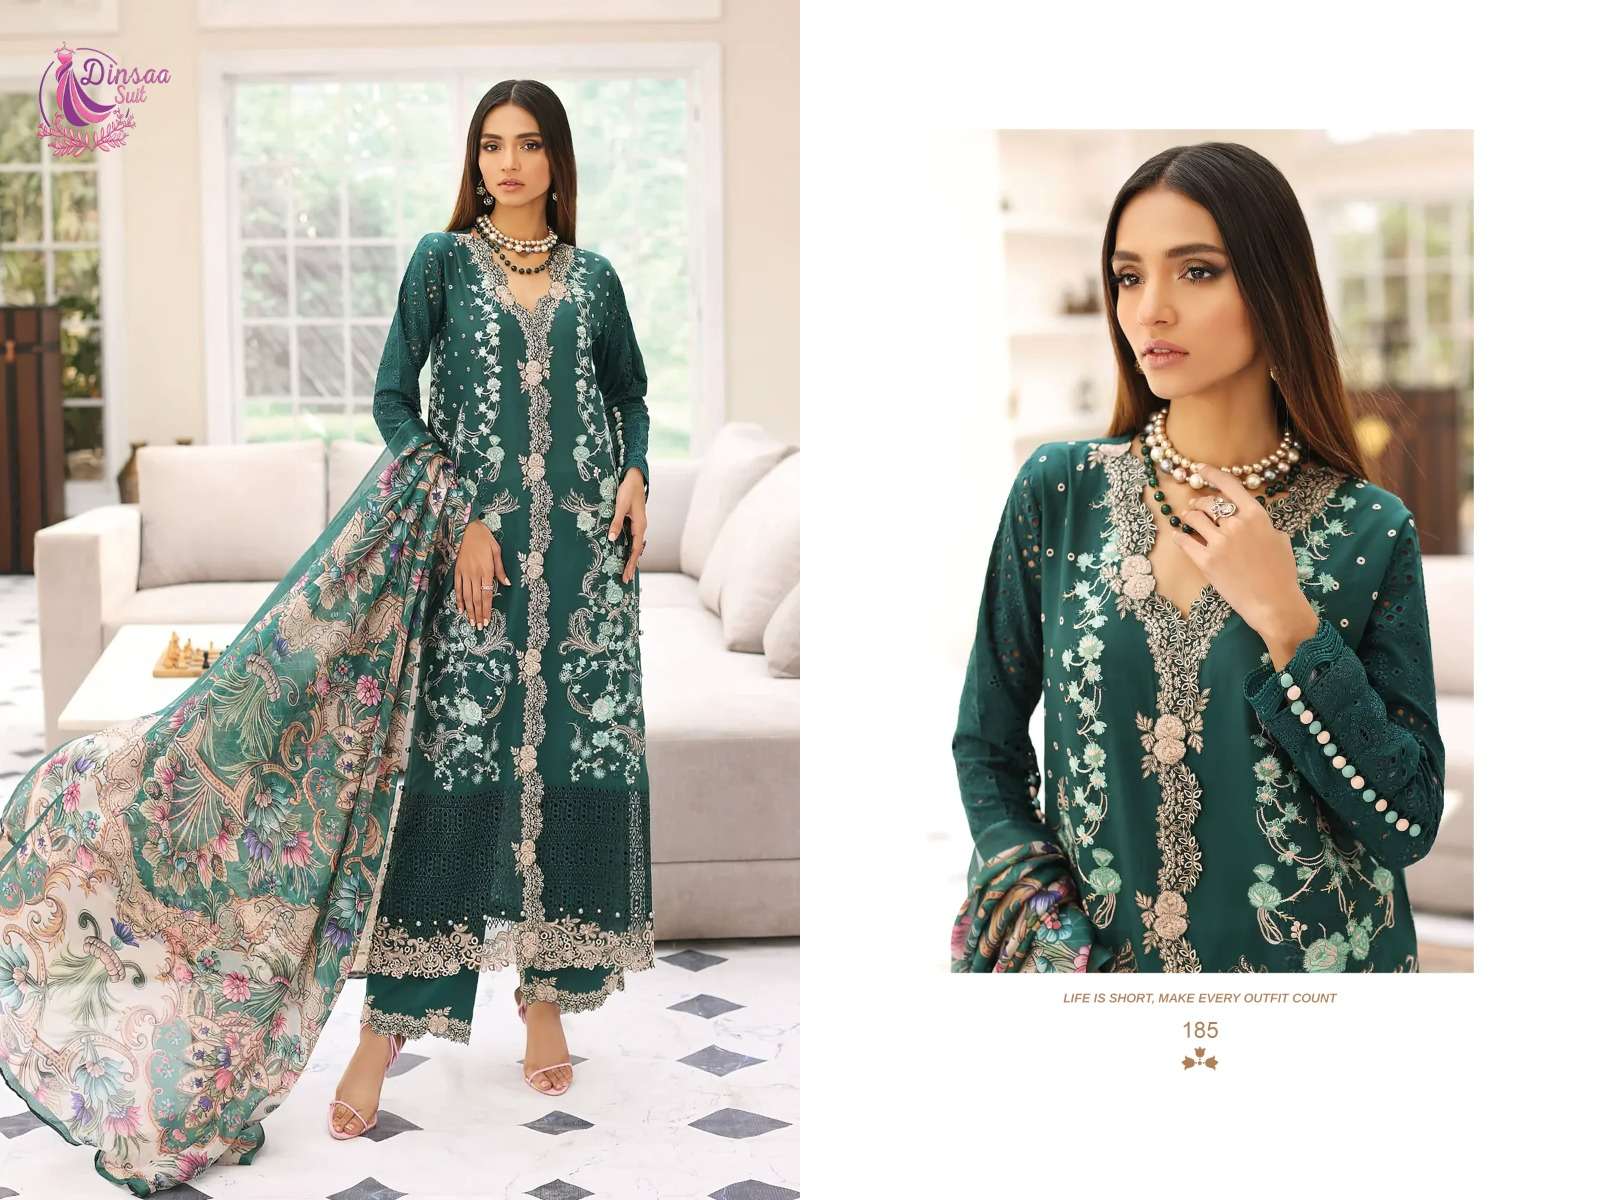 elaf vol-3 by dinsaa suits stylishlook designer pakistani salwar suits catalogue manufacturer surat